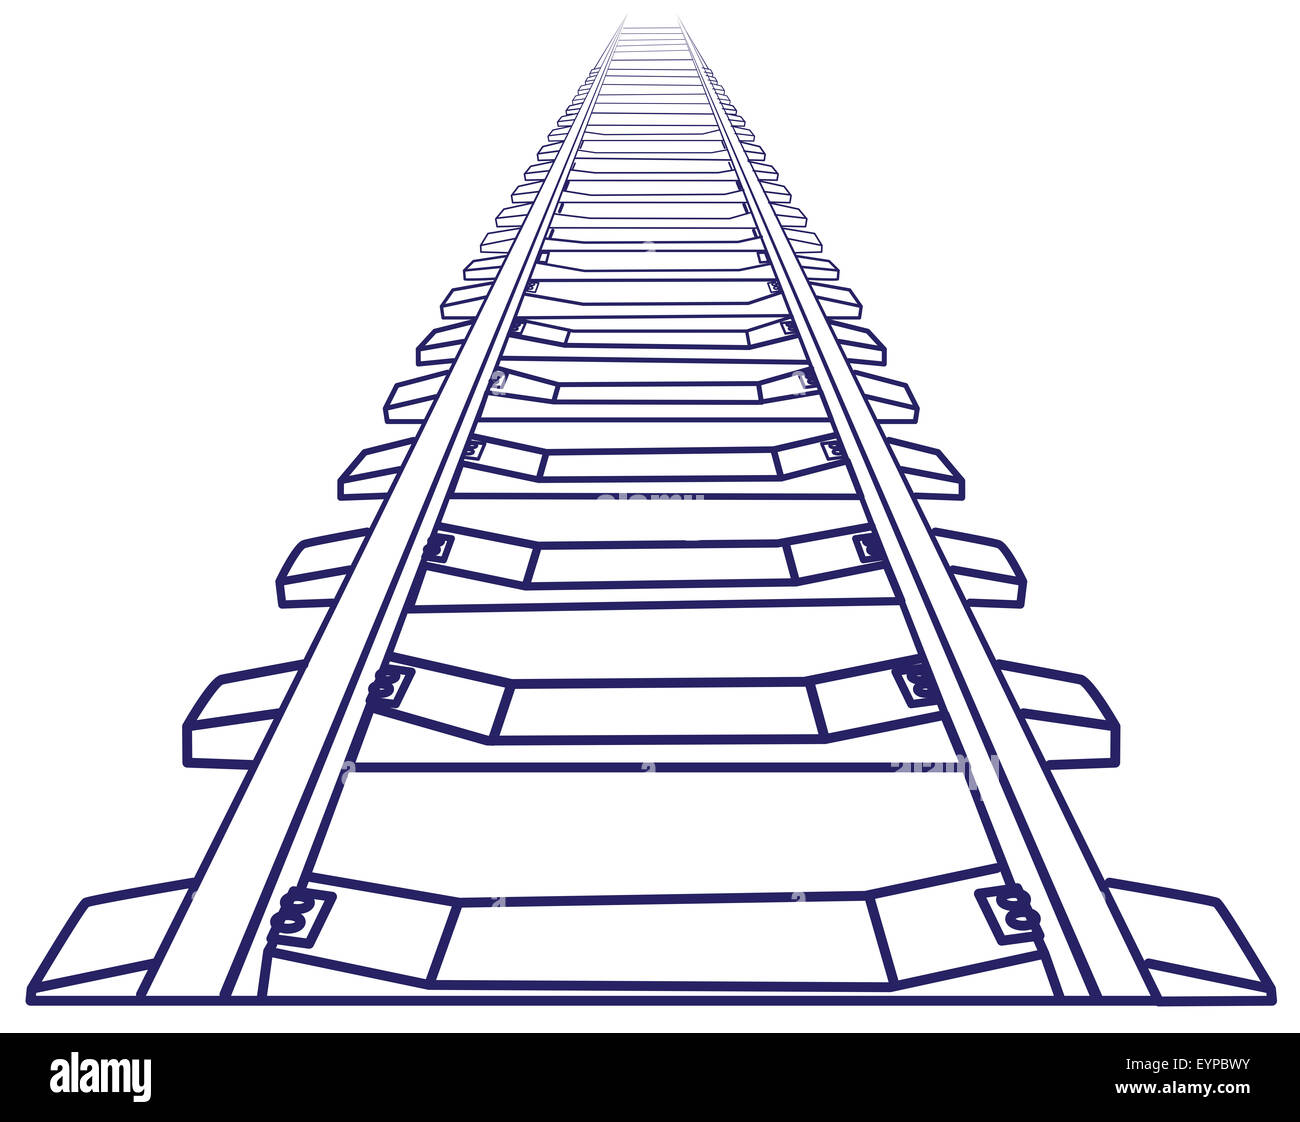 How To Draw Railroad Tracks Step By Step - Draw-herpity